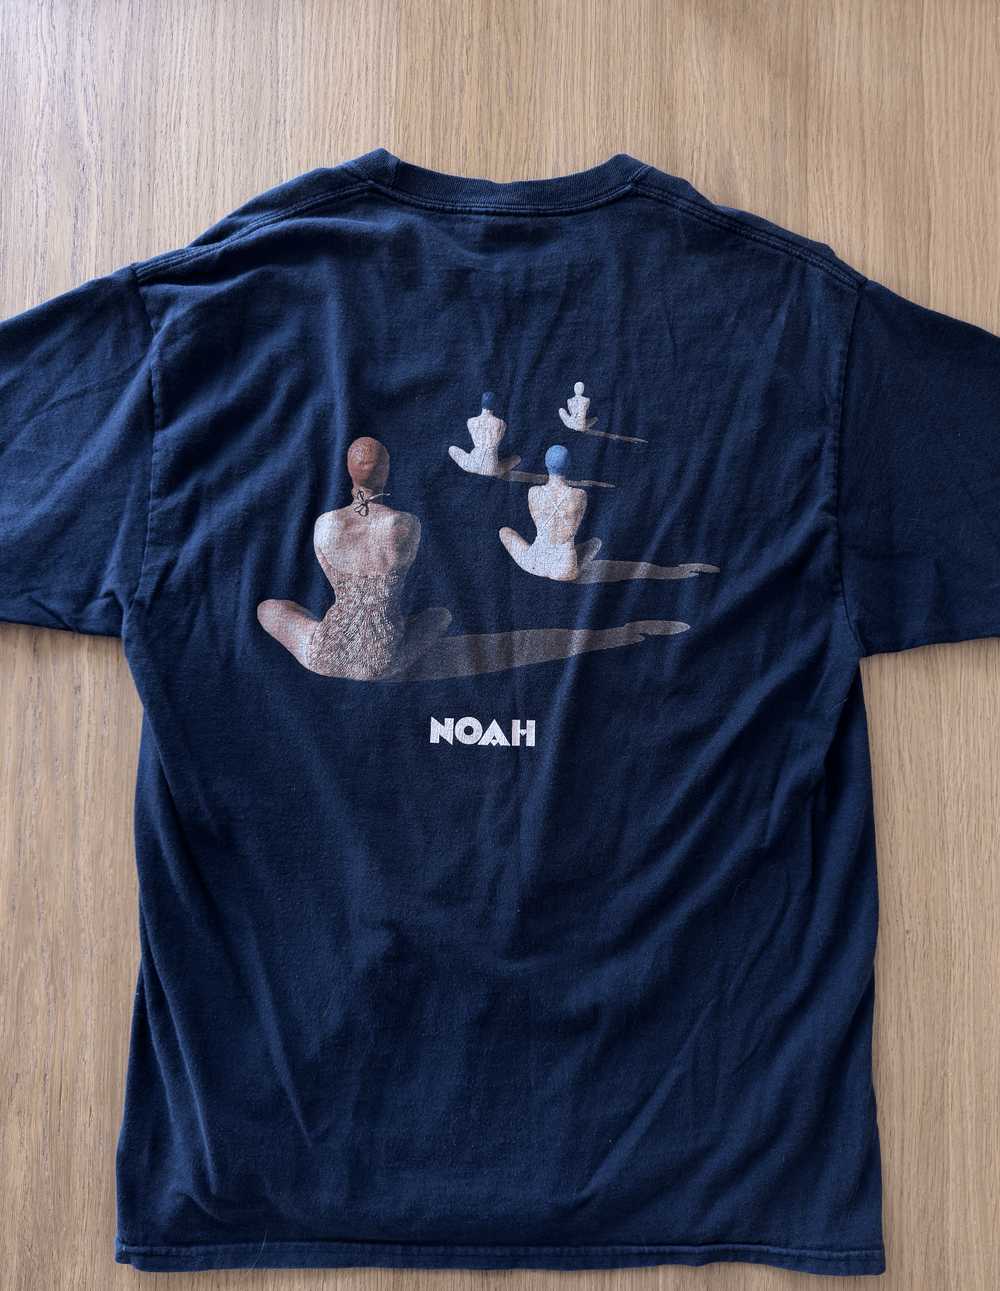 Noah T-Shirt - image 2